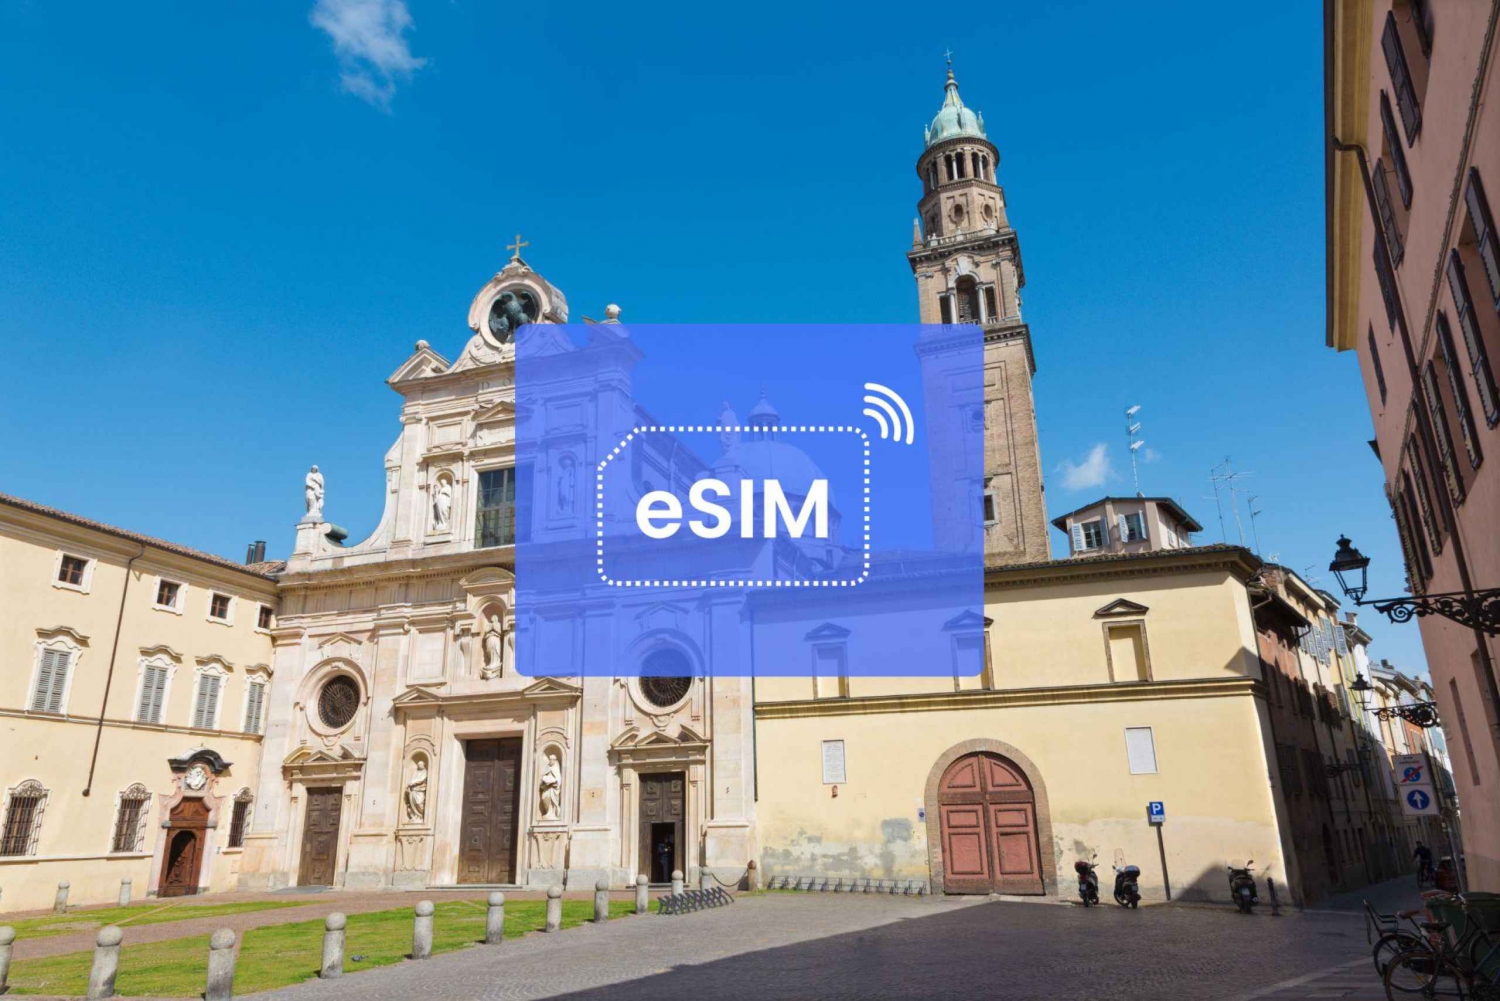 Parma: Italy/ Europe eSIM Roaming Mobile Data Plan